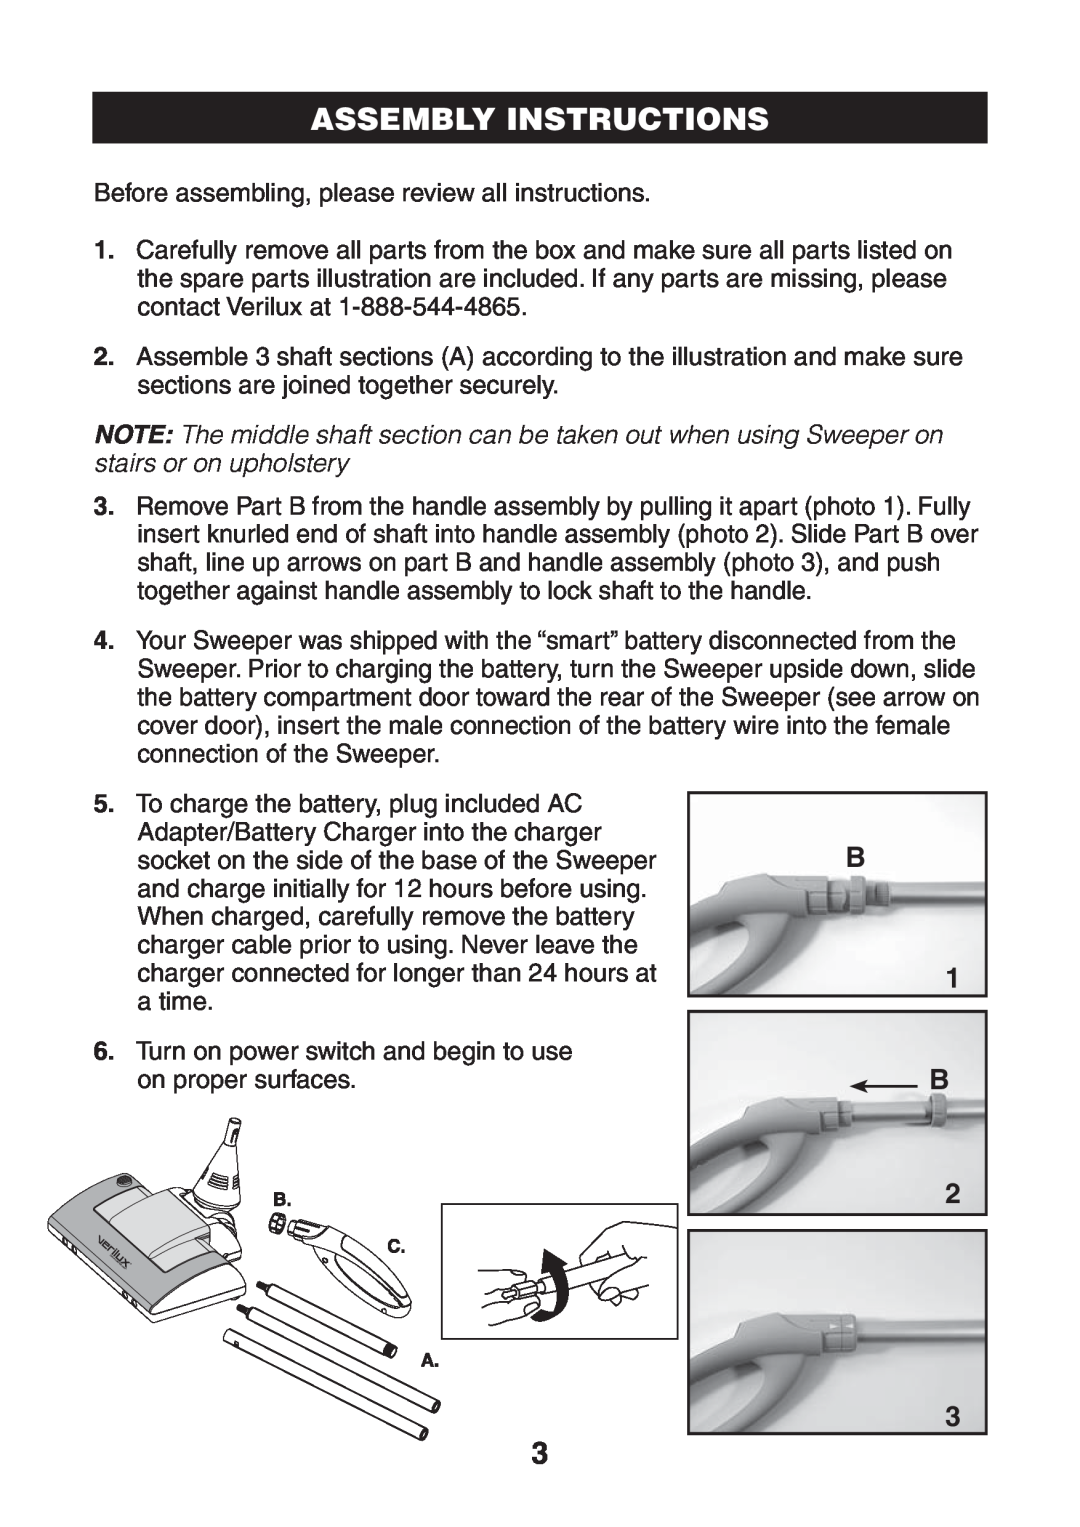 Verilux UV-C manual Assembly Instructions, B 1 B 